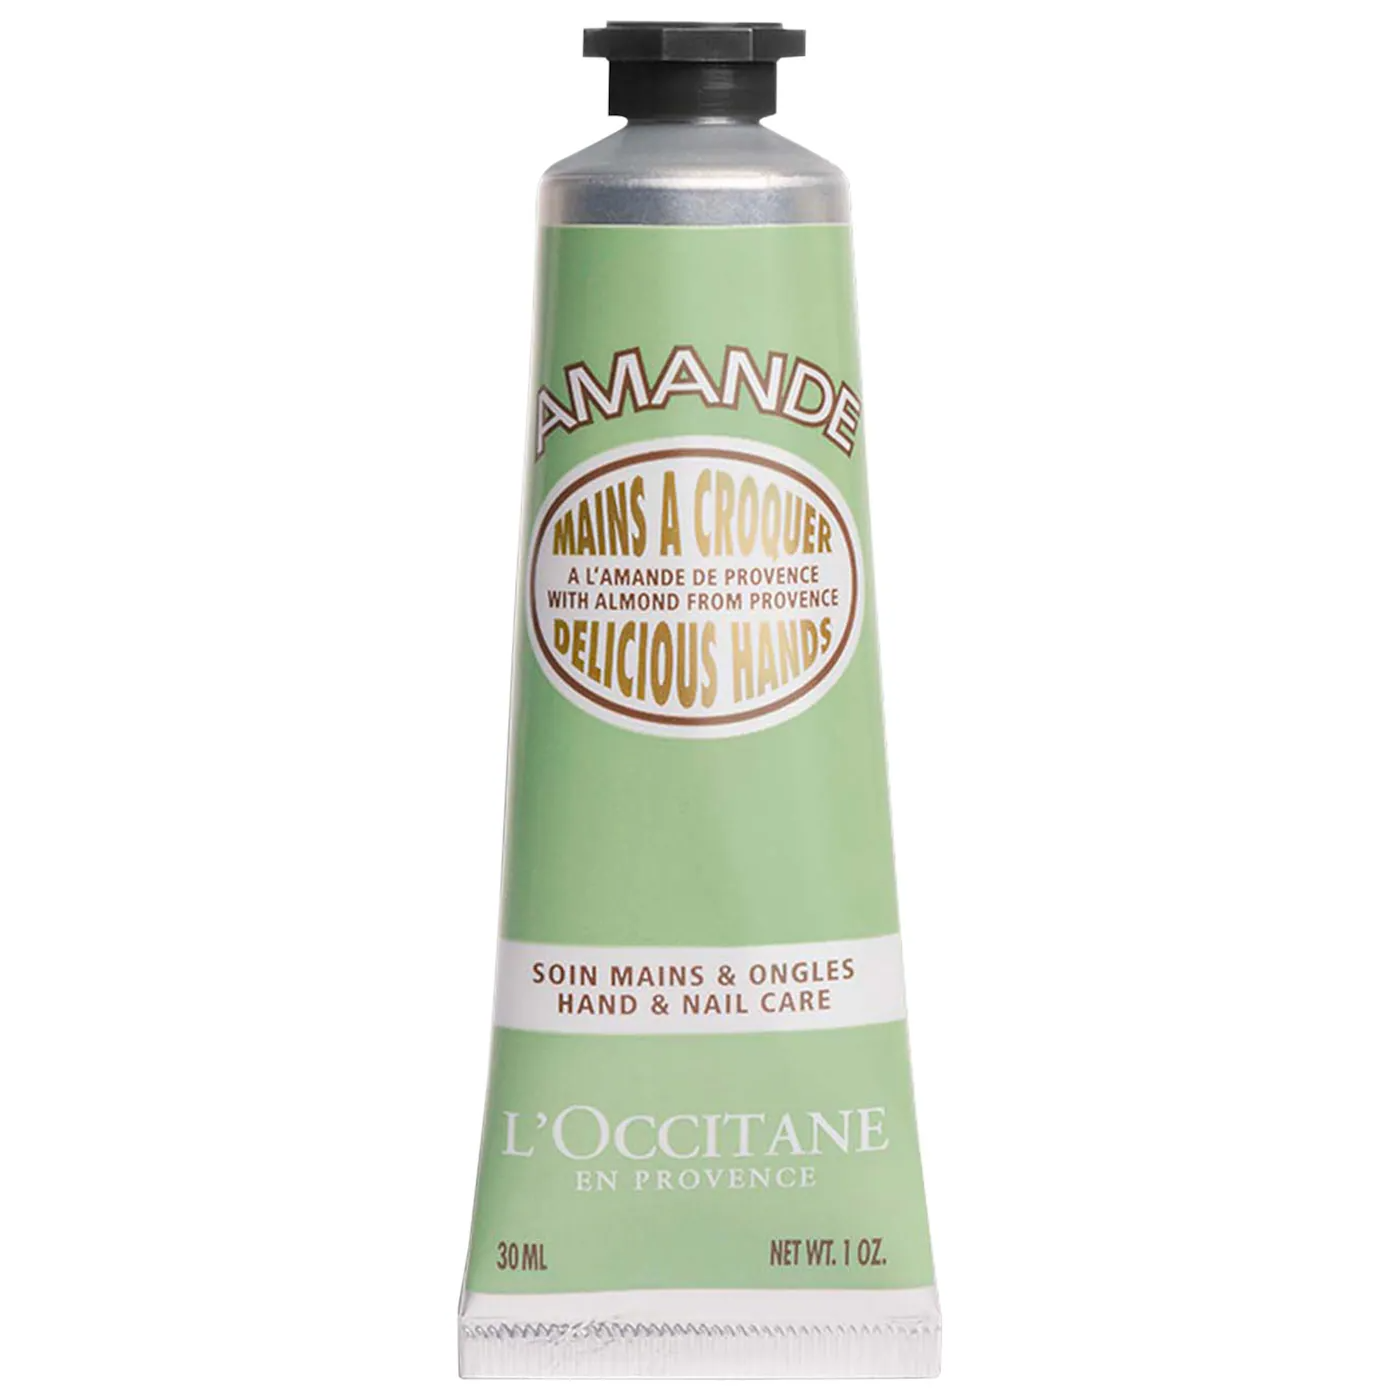 L’Occitane + Nourishing and Protective Shea Butter Hand Cream